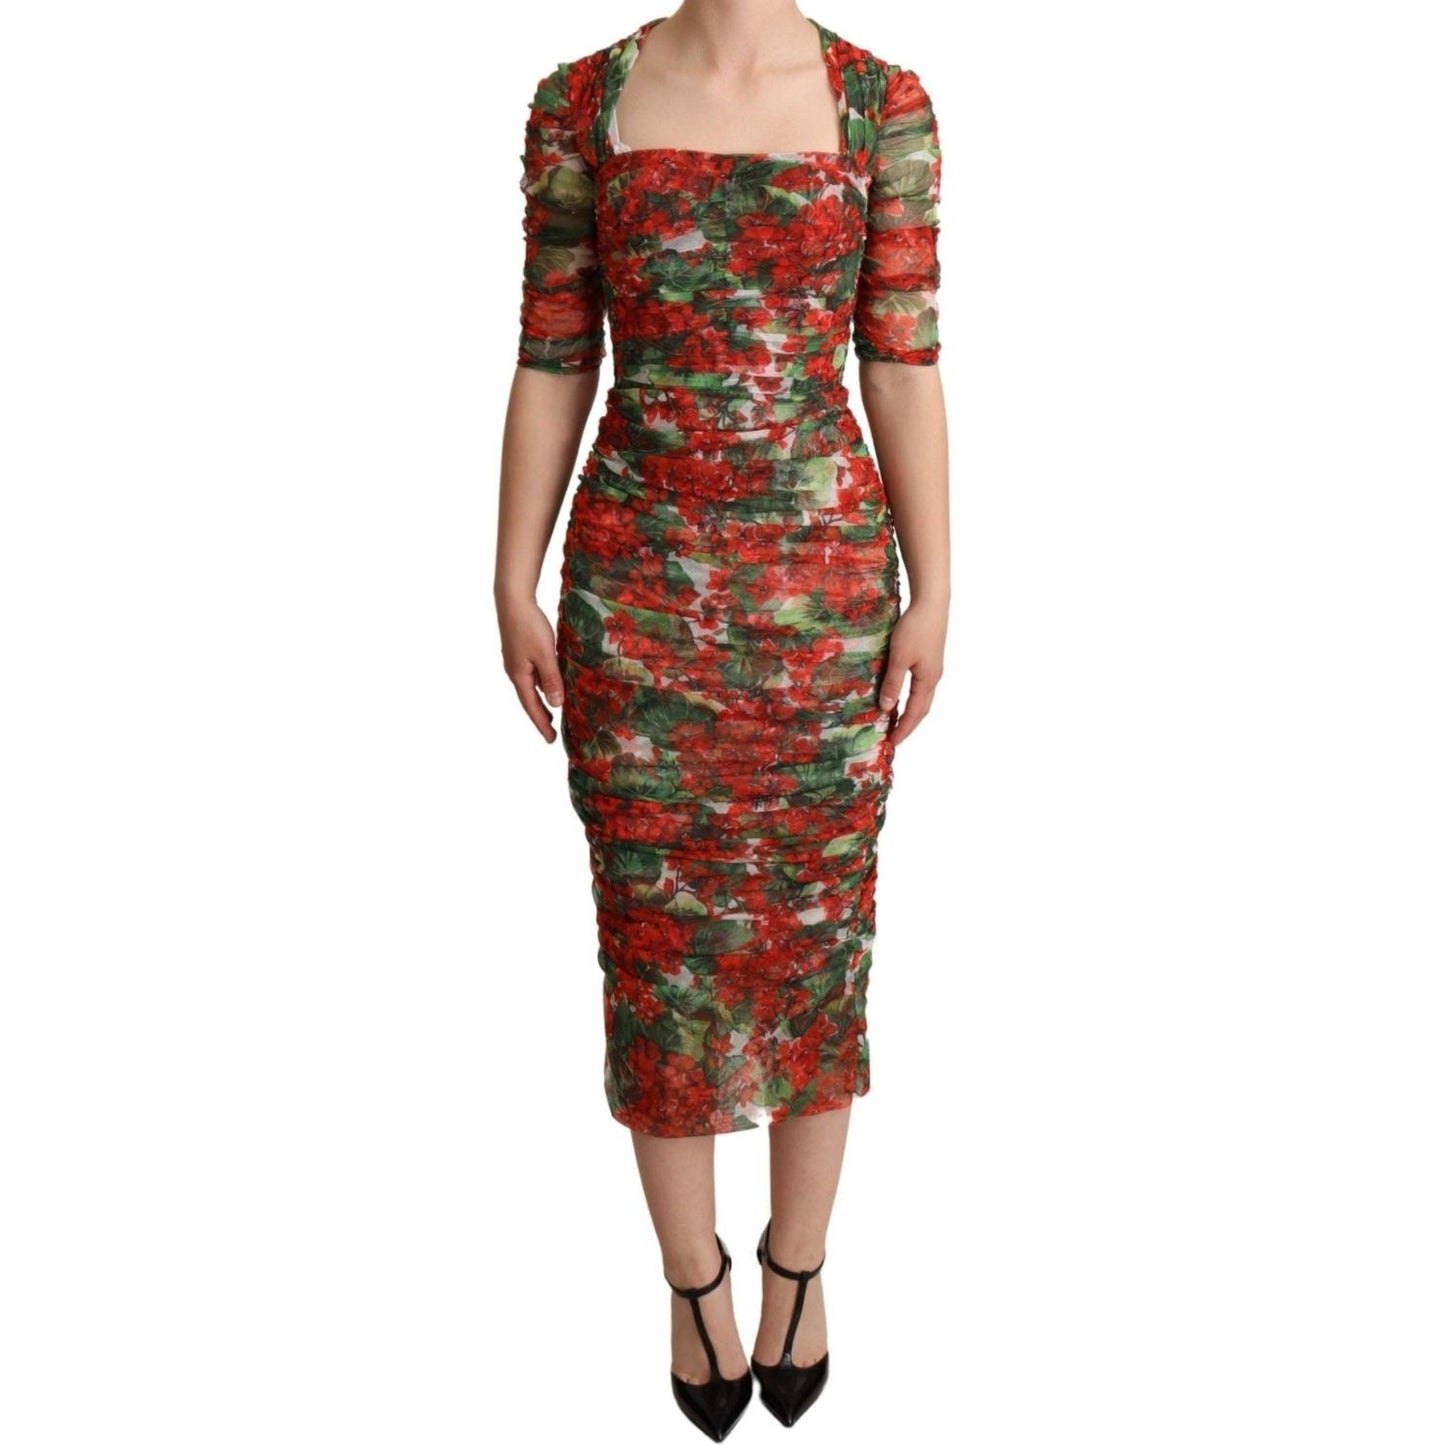 Dolce & Gabbana Elegant Red Floral Midi Sheath Dress WOMAN DRESSES red-floral-print-tulle-sheath-midi-dress IMG_0143-scaled-e4d94cc8-56f.jpg